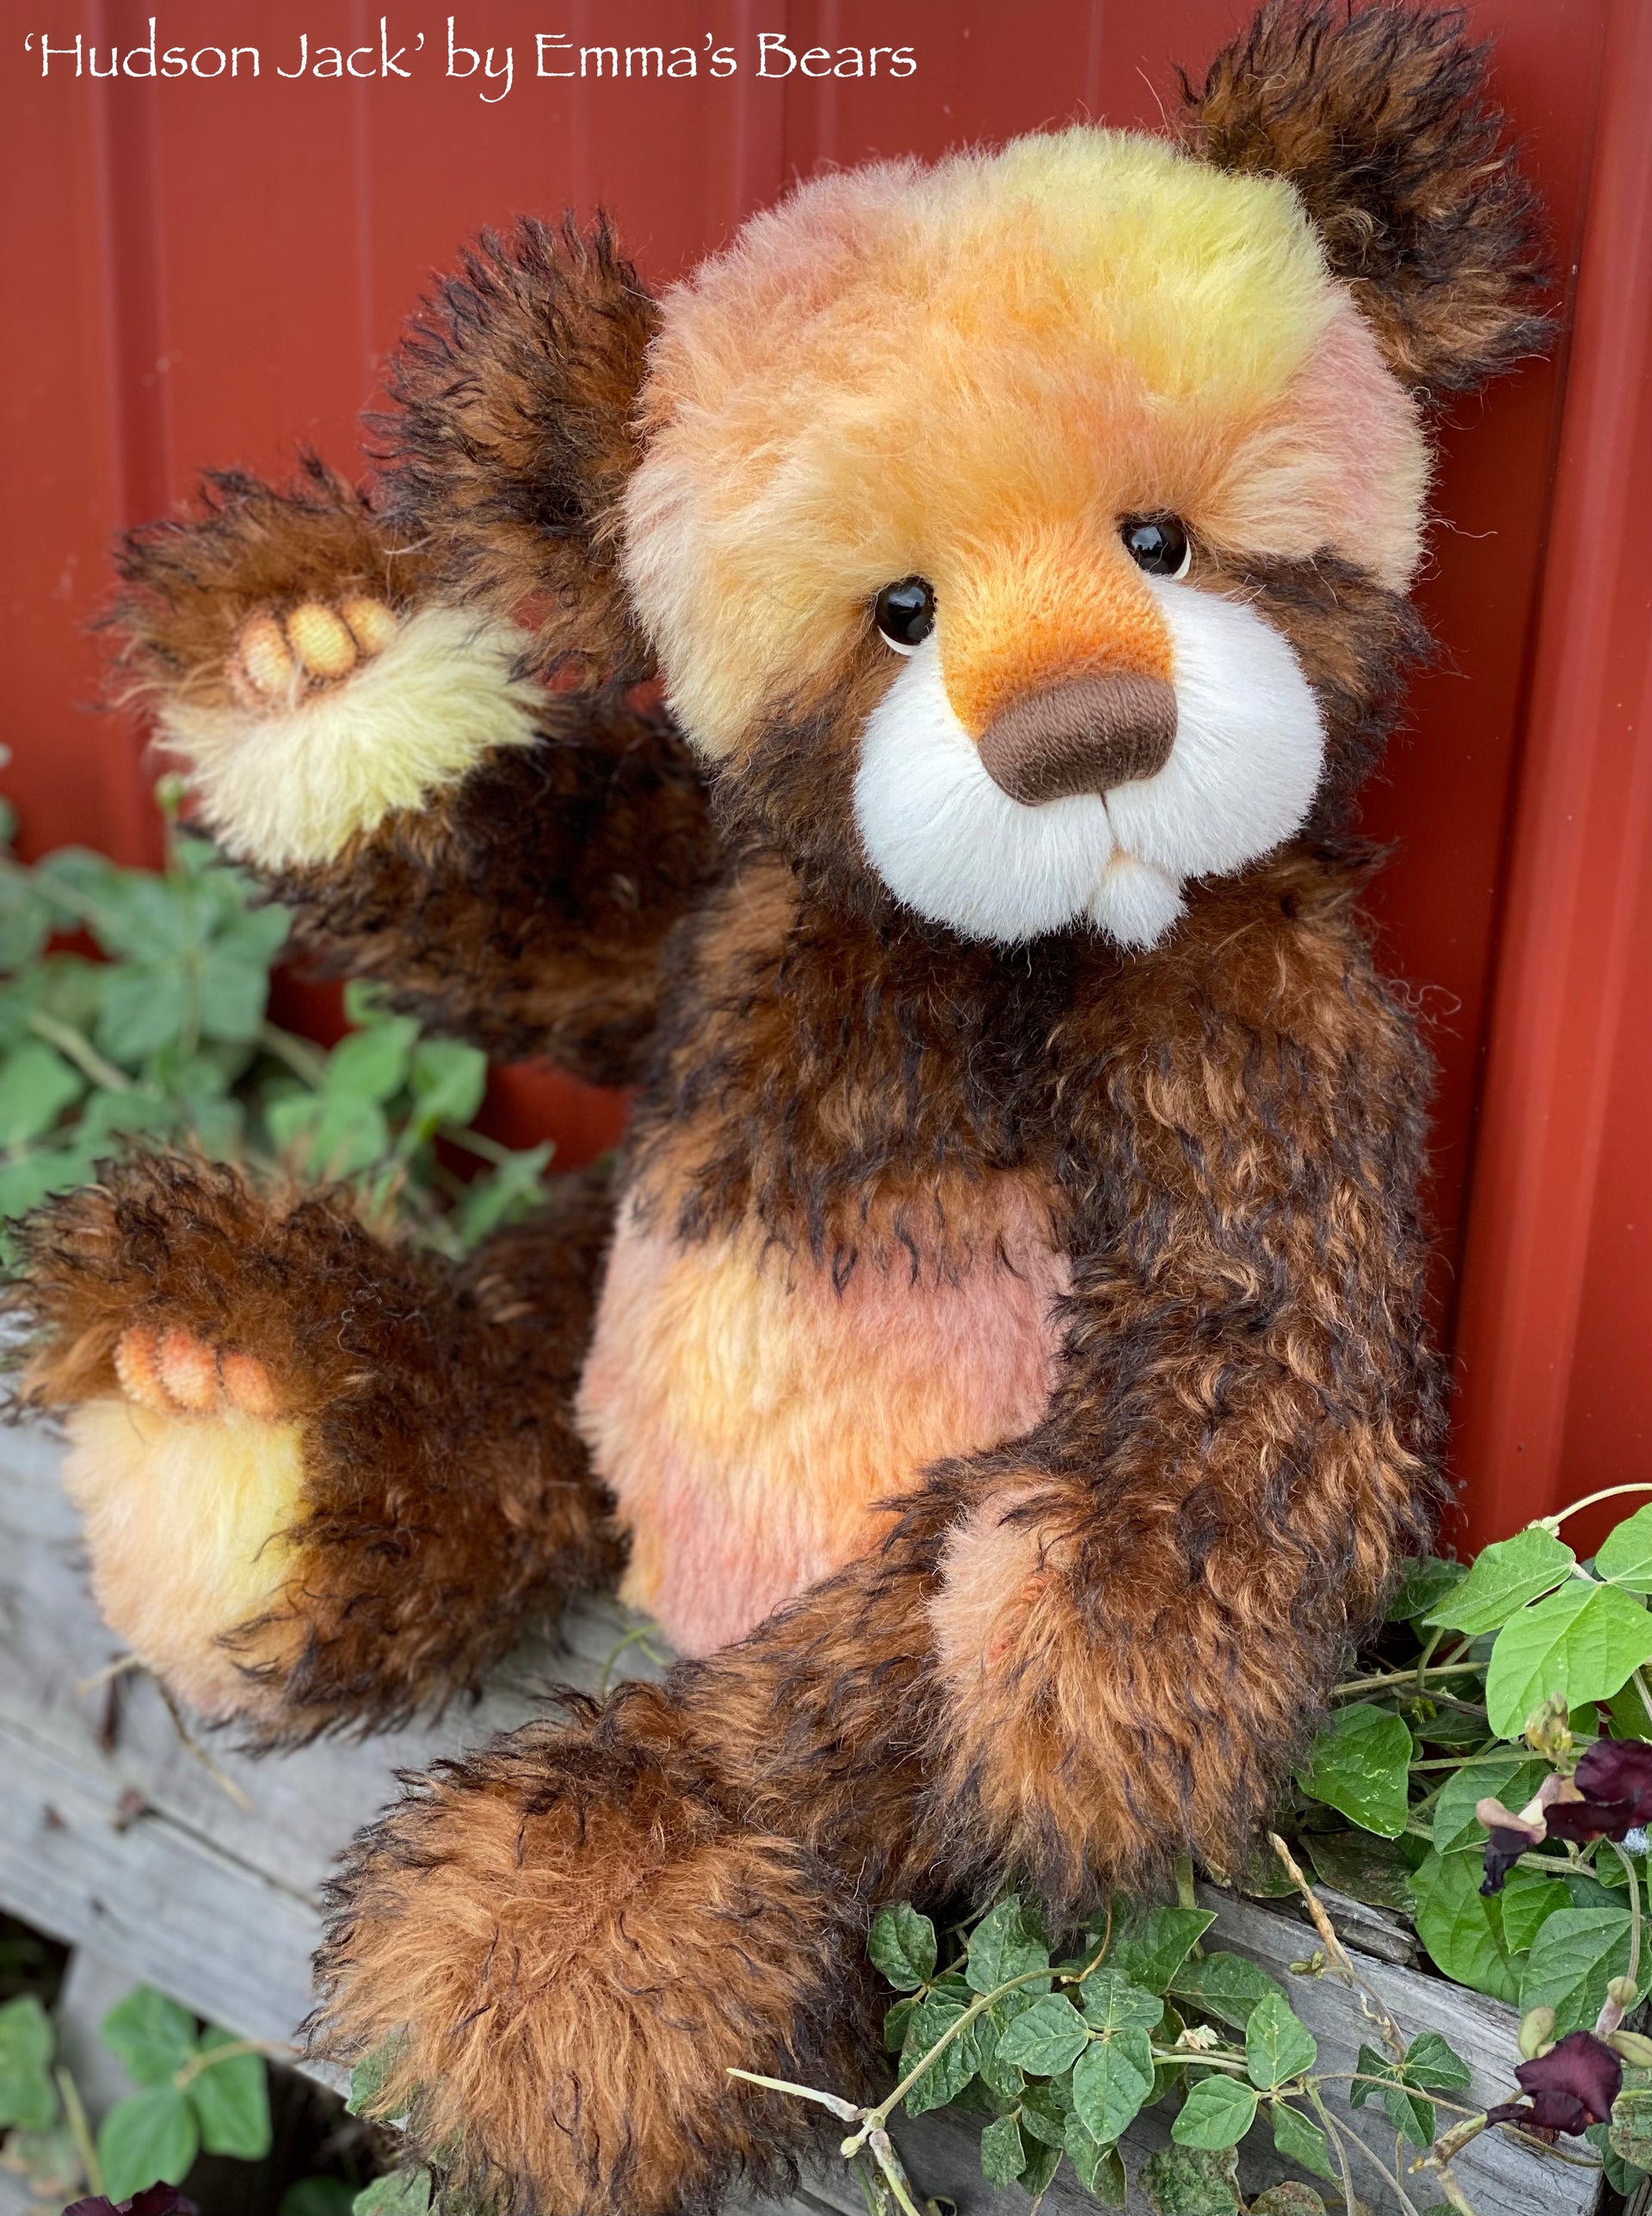 Hudson Jack - 18" Curlylocks Mohair and Alpaca Artist Baby Bear by Emma's Bears - OOAK